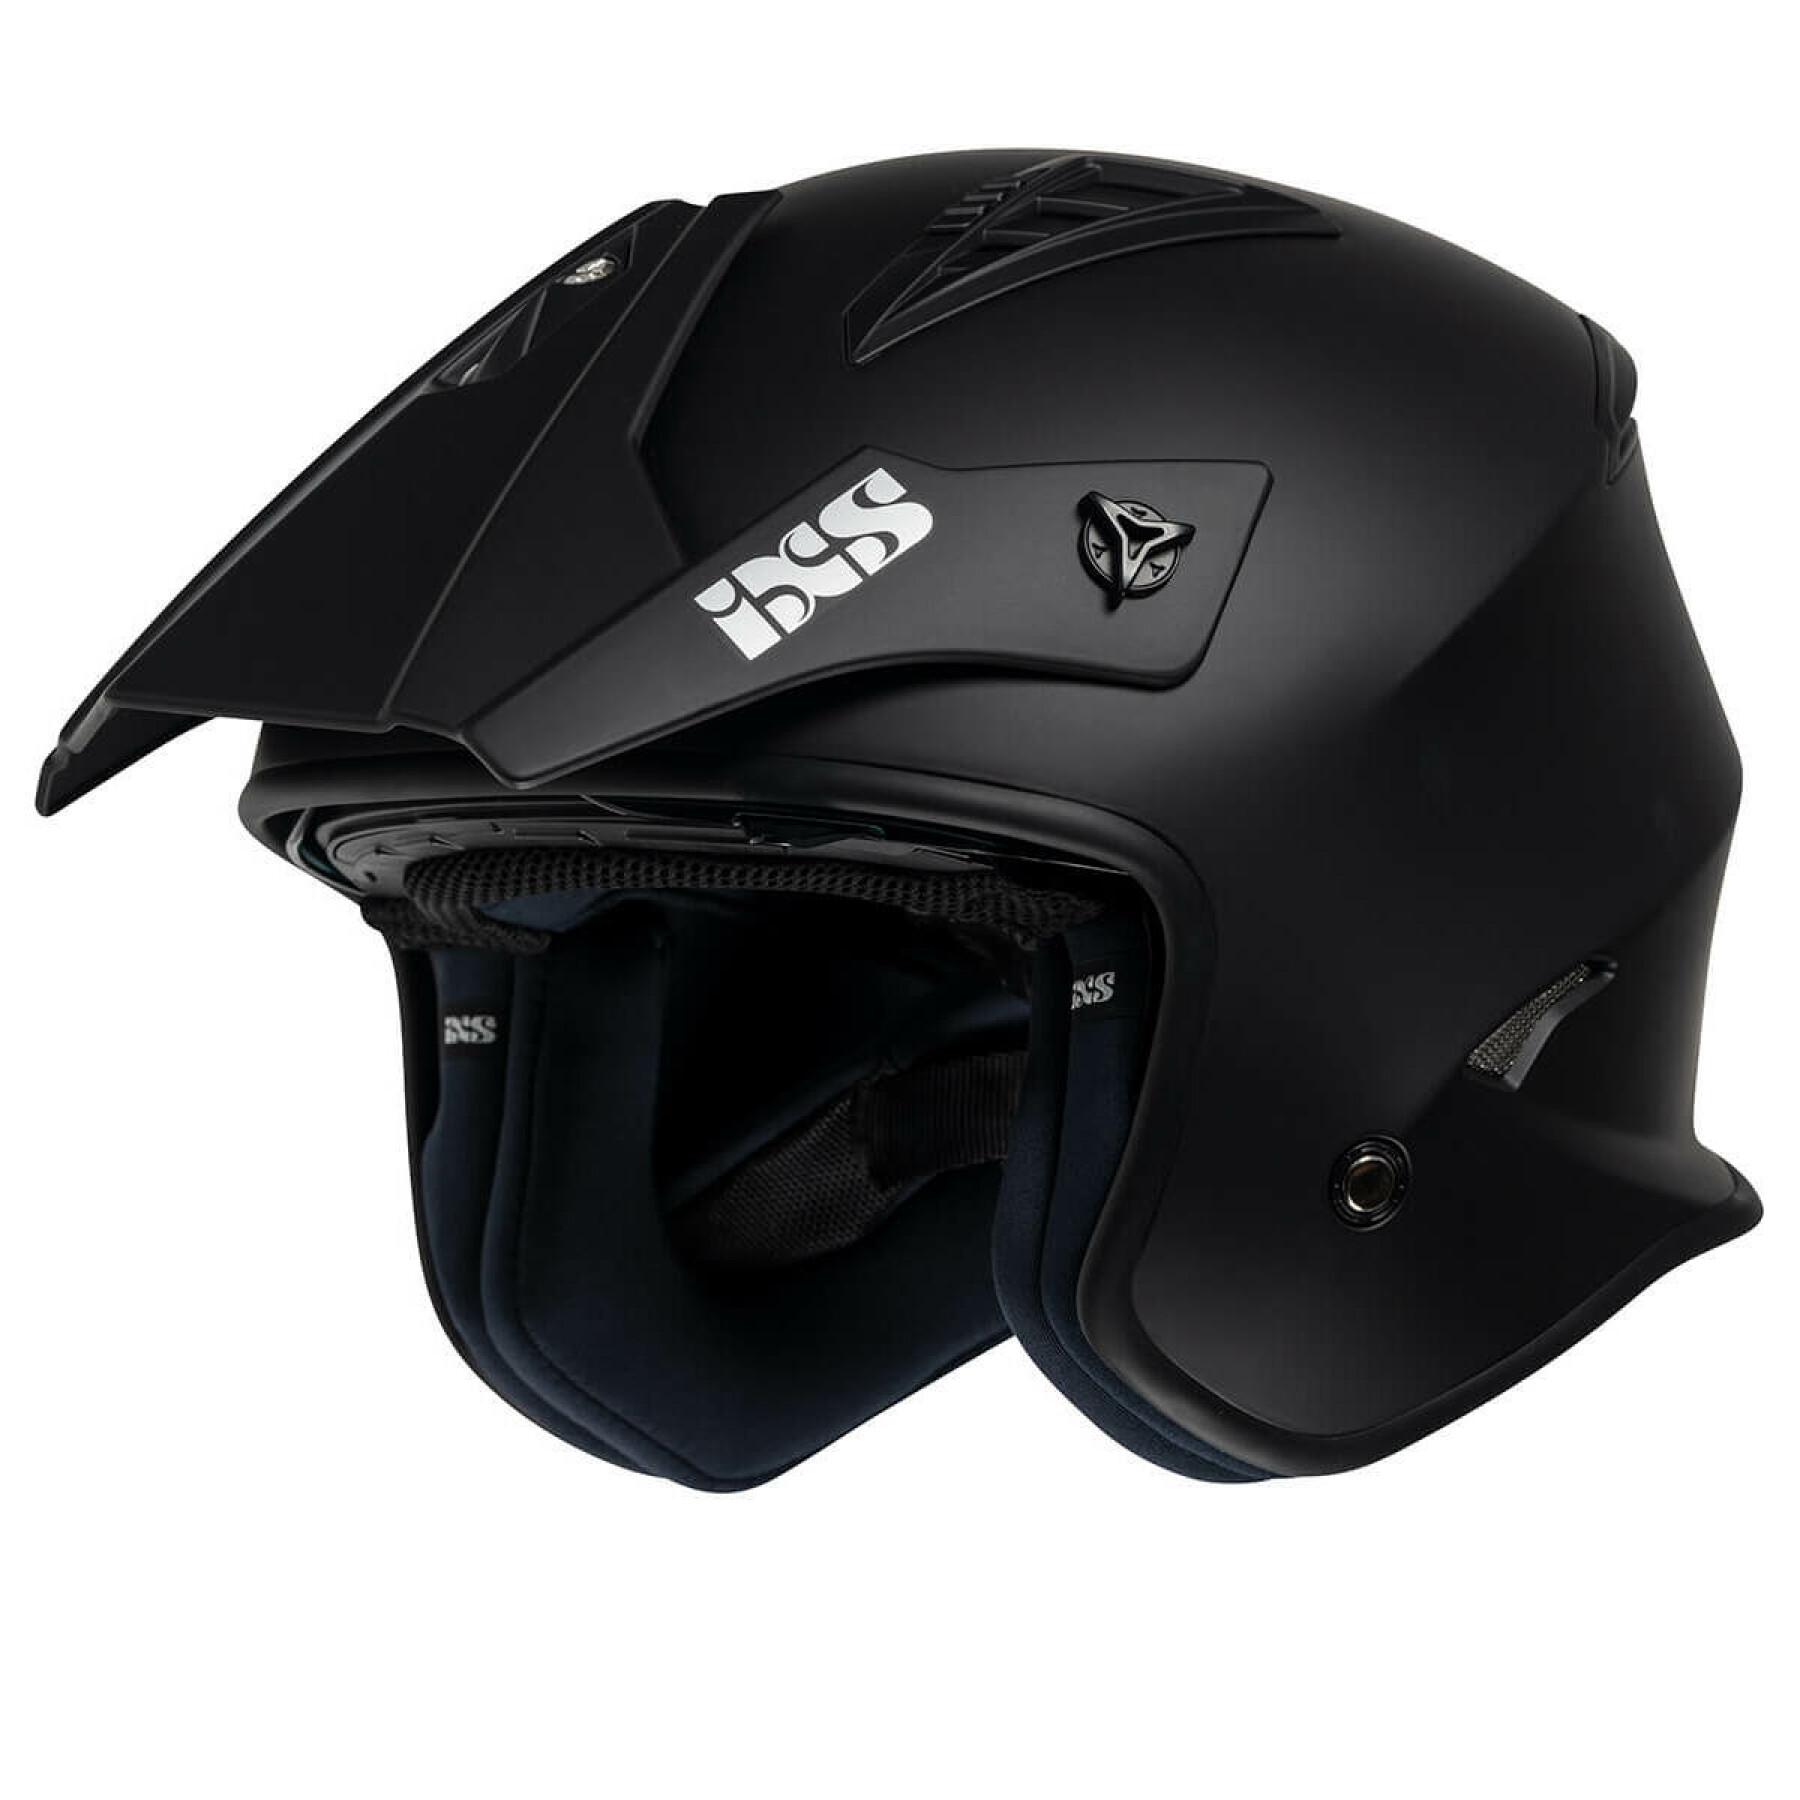 Jet motorcycle helmet IXS114 3.0